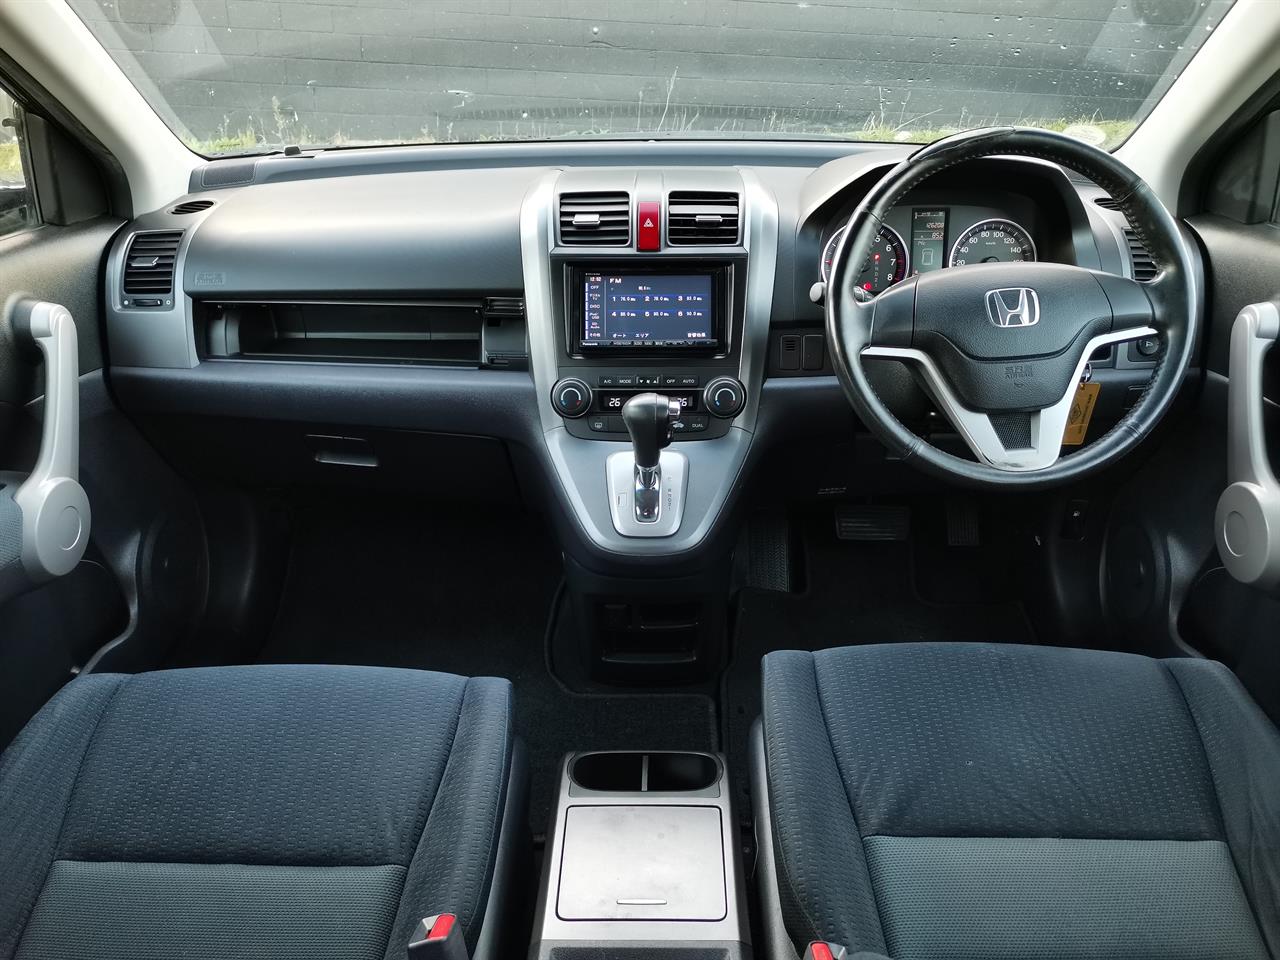 Honda CR-V 2007 Image 7